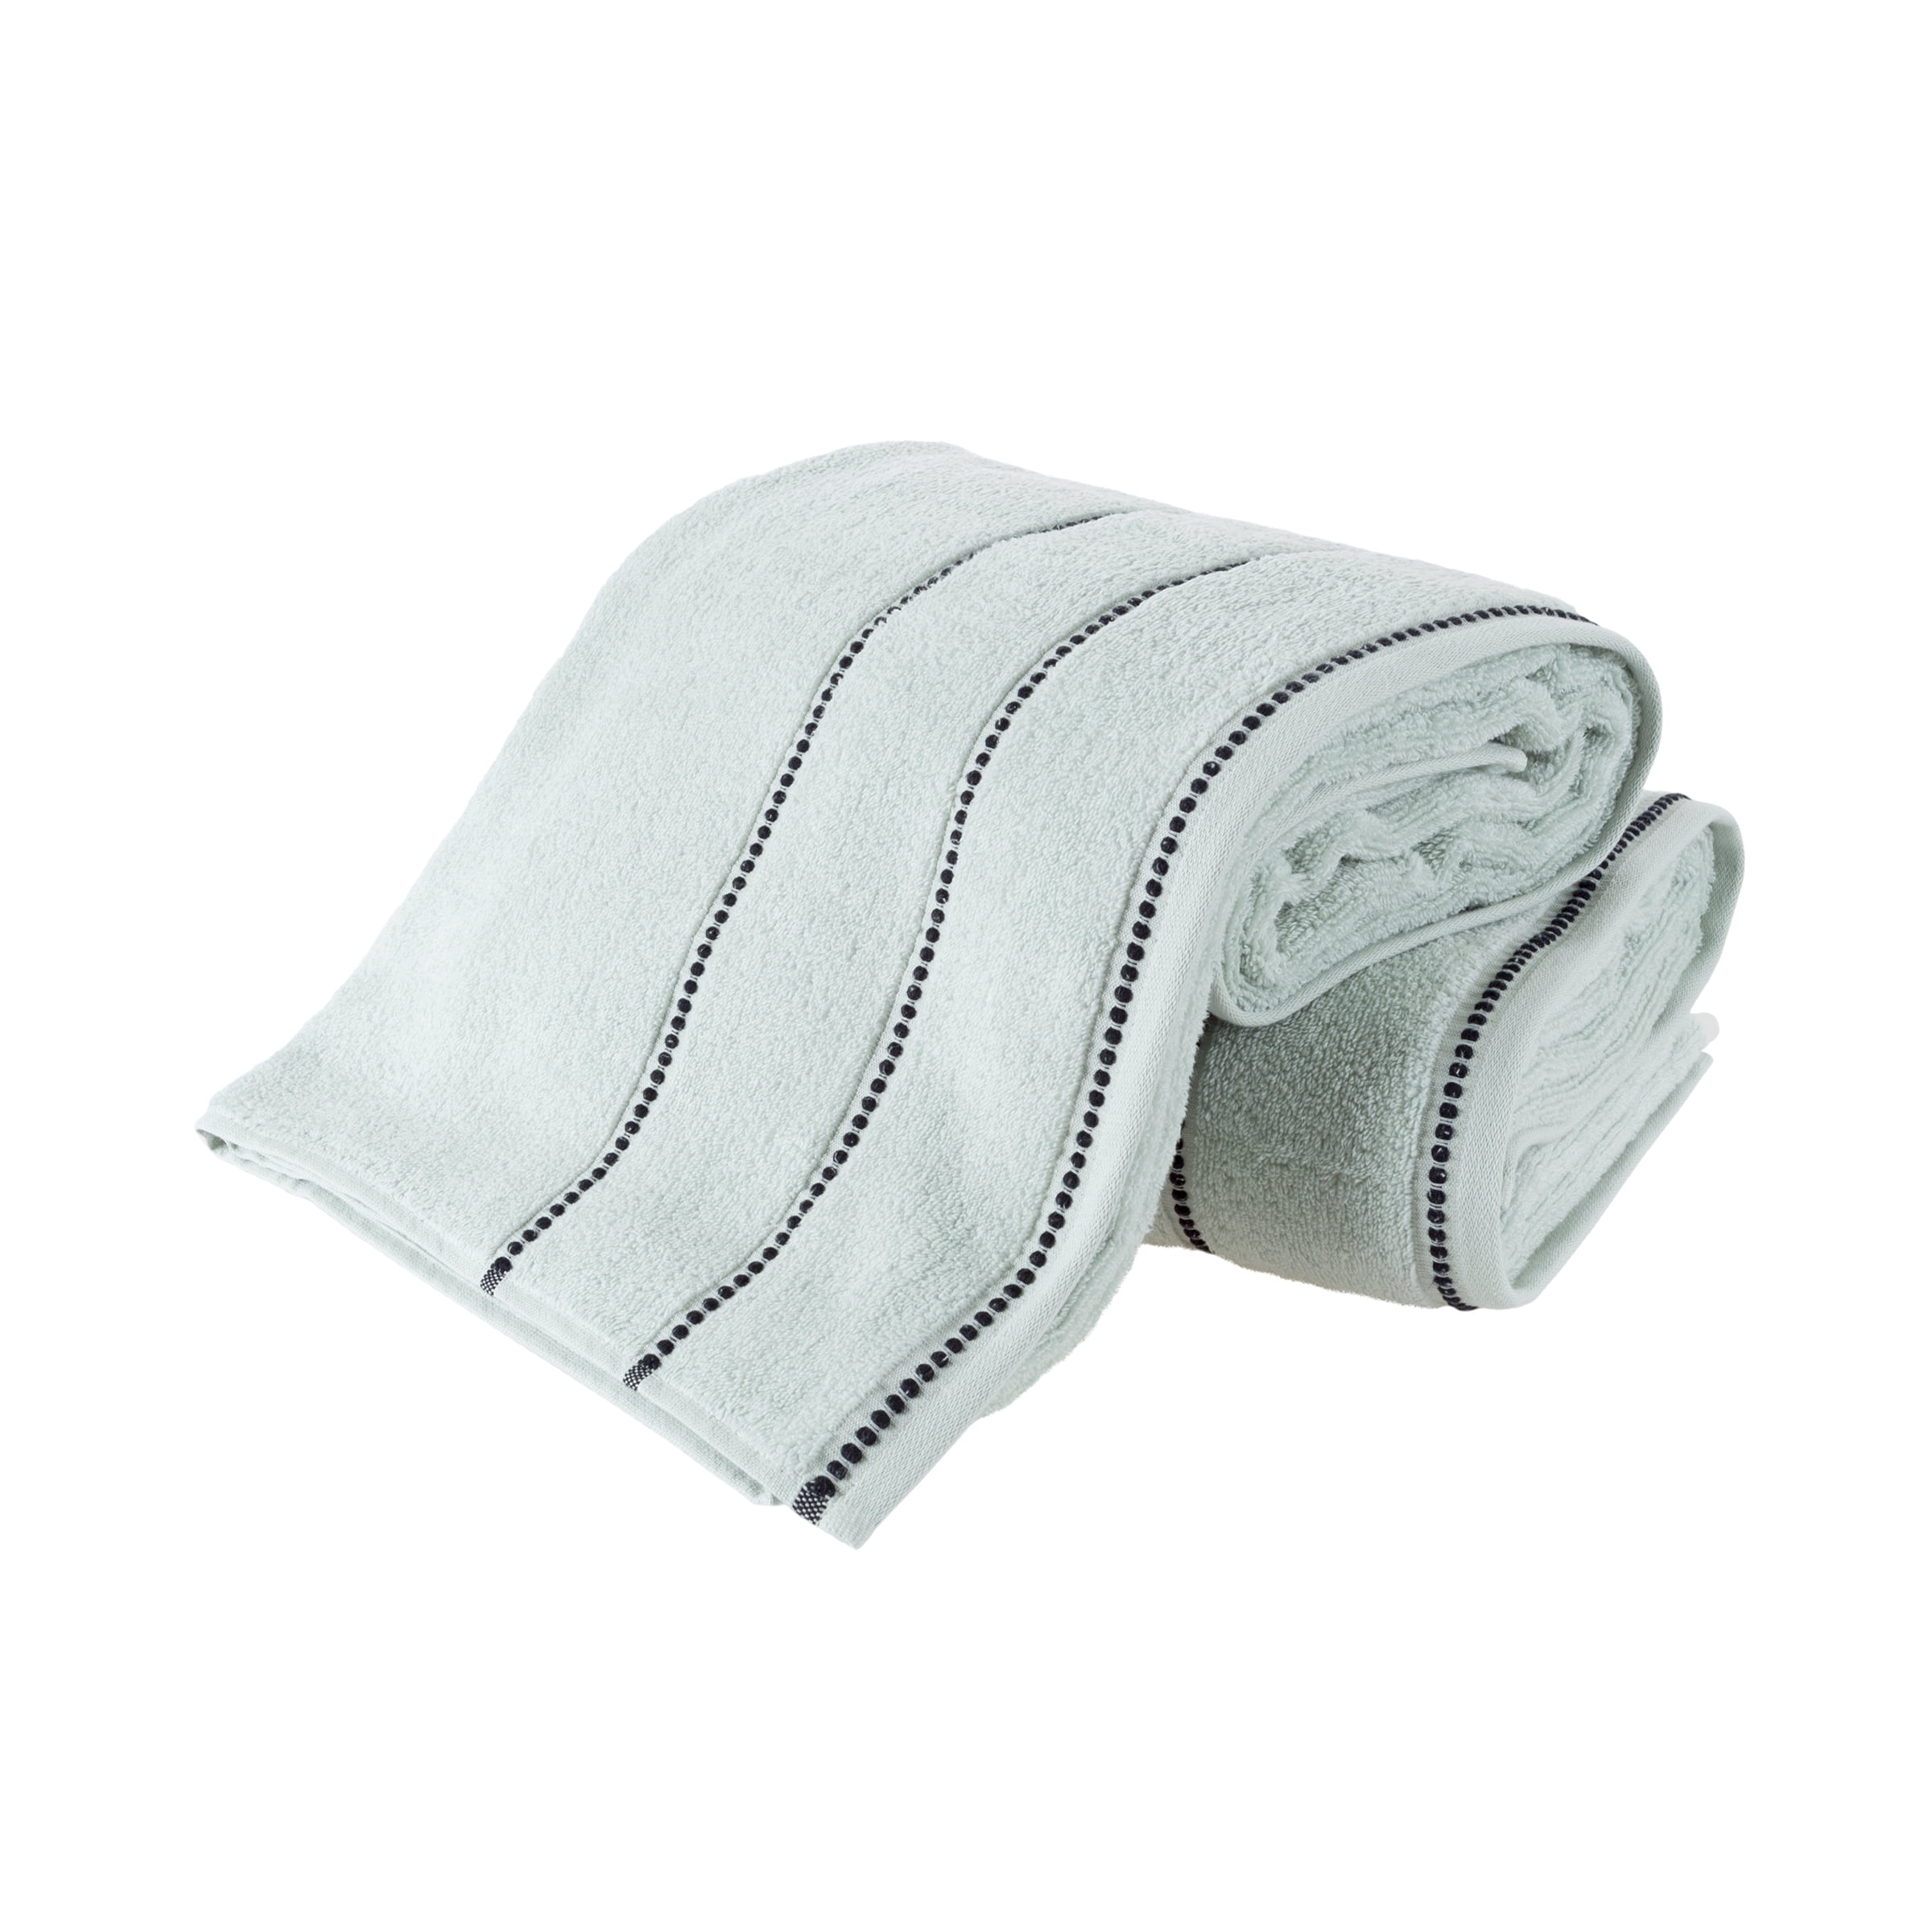 Cotton Craft 6 Piece Towel Set - 100% Cotton Plush 600 GSM Towels - Sculpted Super Zero Twist Pleated Ribbed Bathroom Towel Set - Soft Absorbent